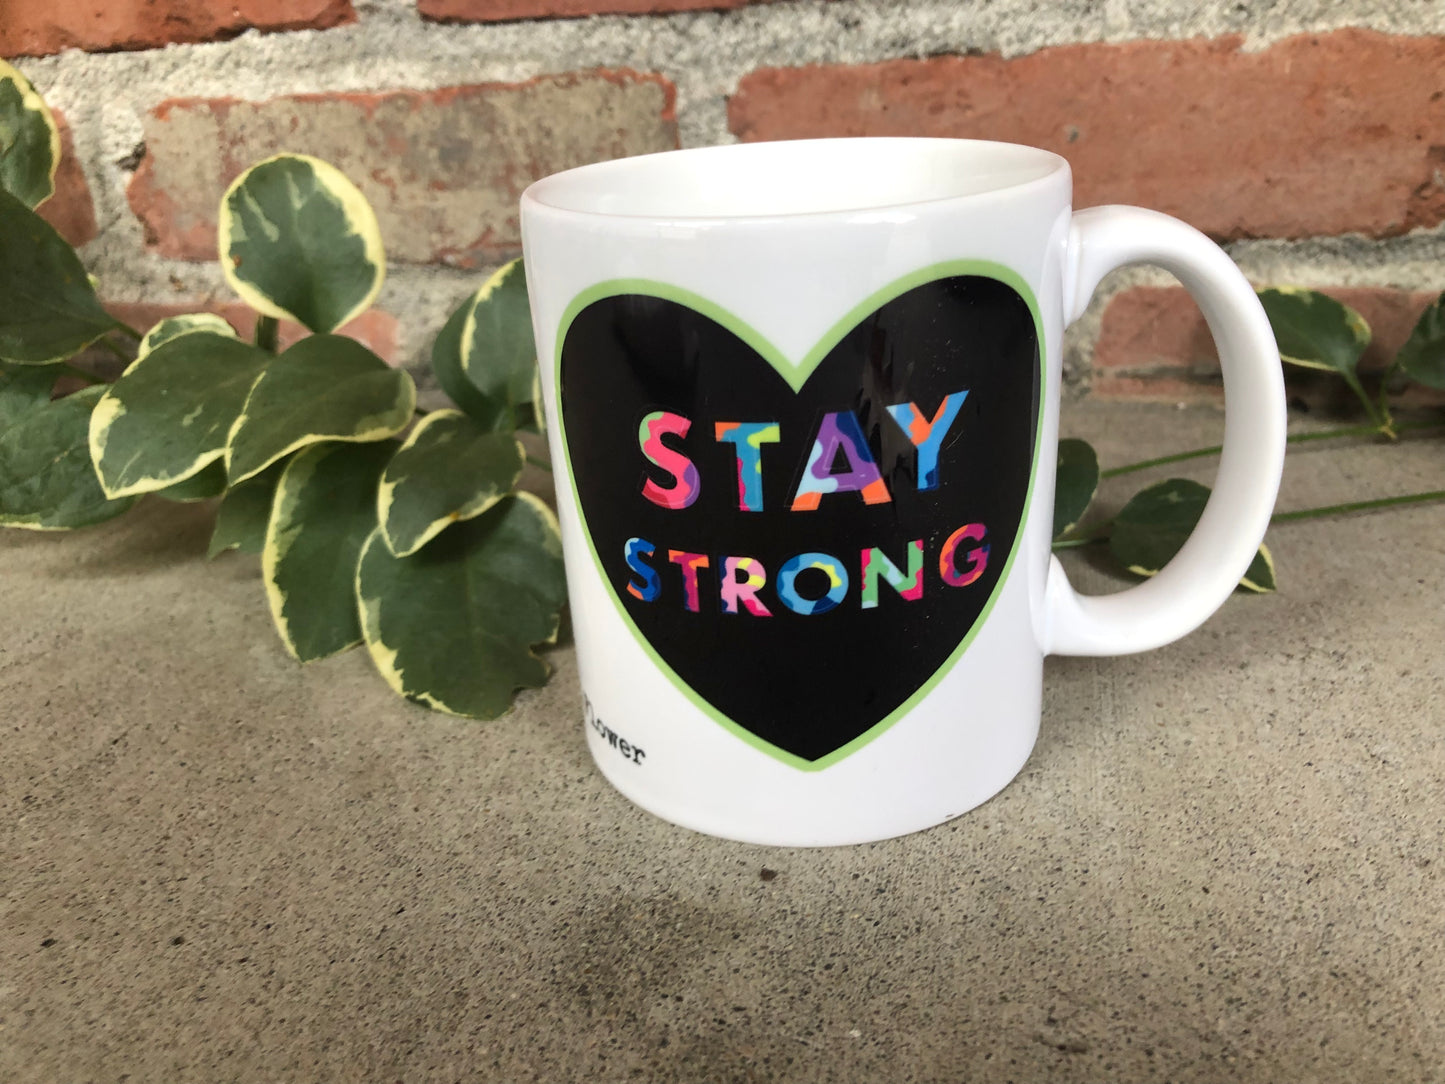 "Stay strong" mug, Strength & love mug, Sending love mug.